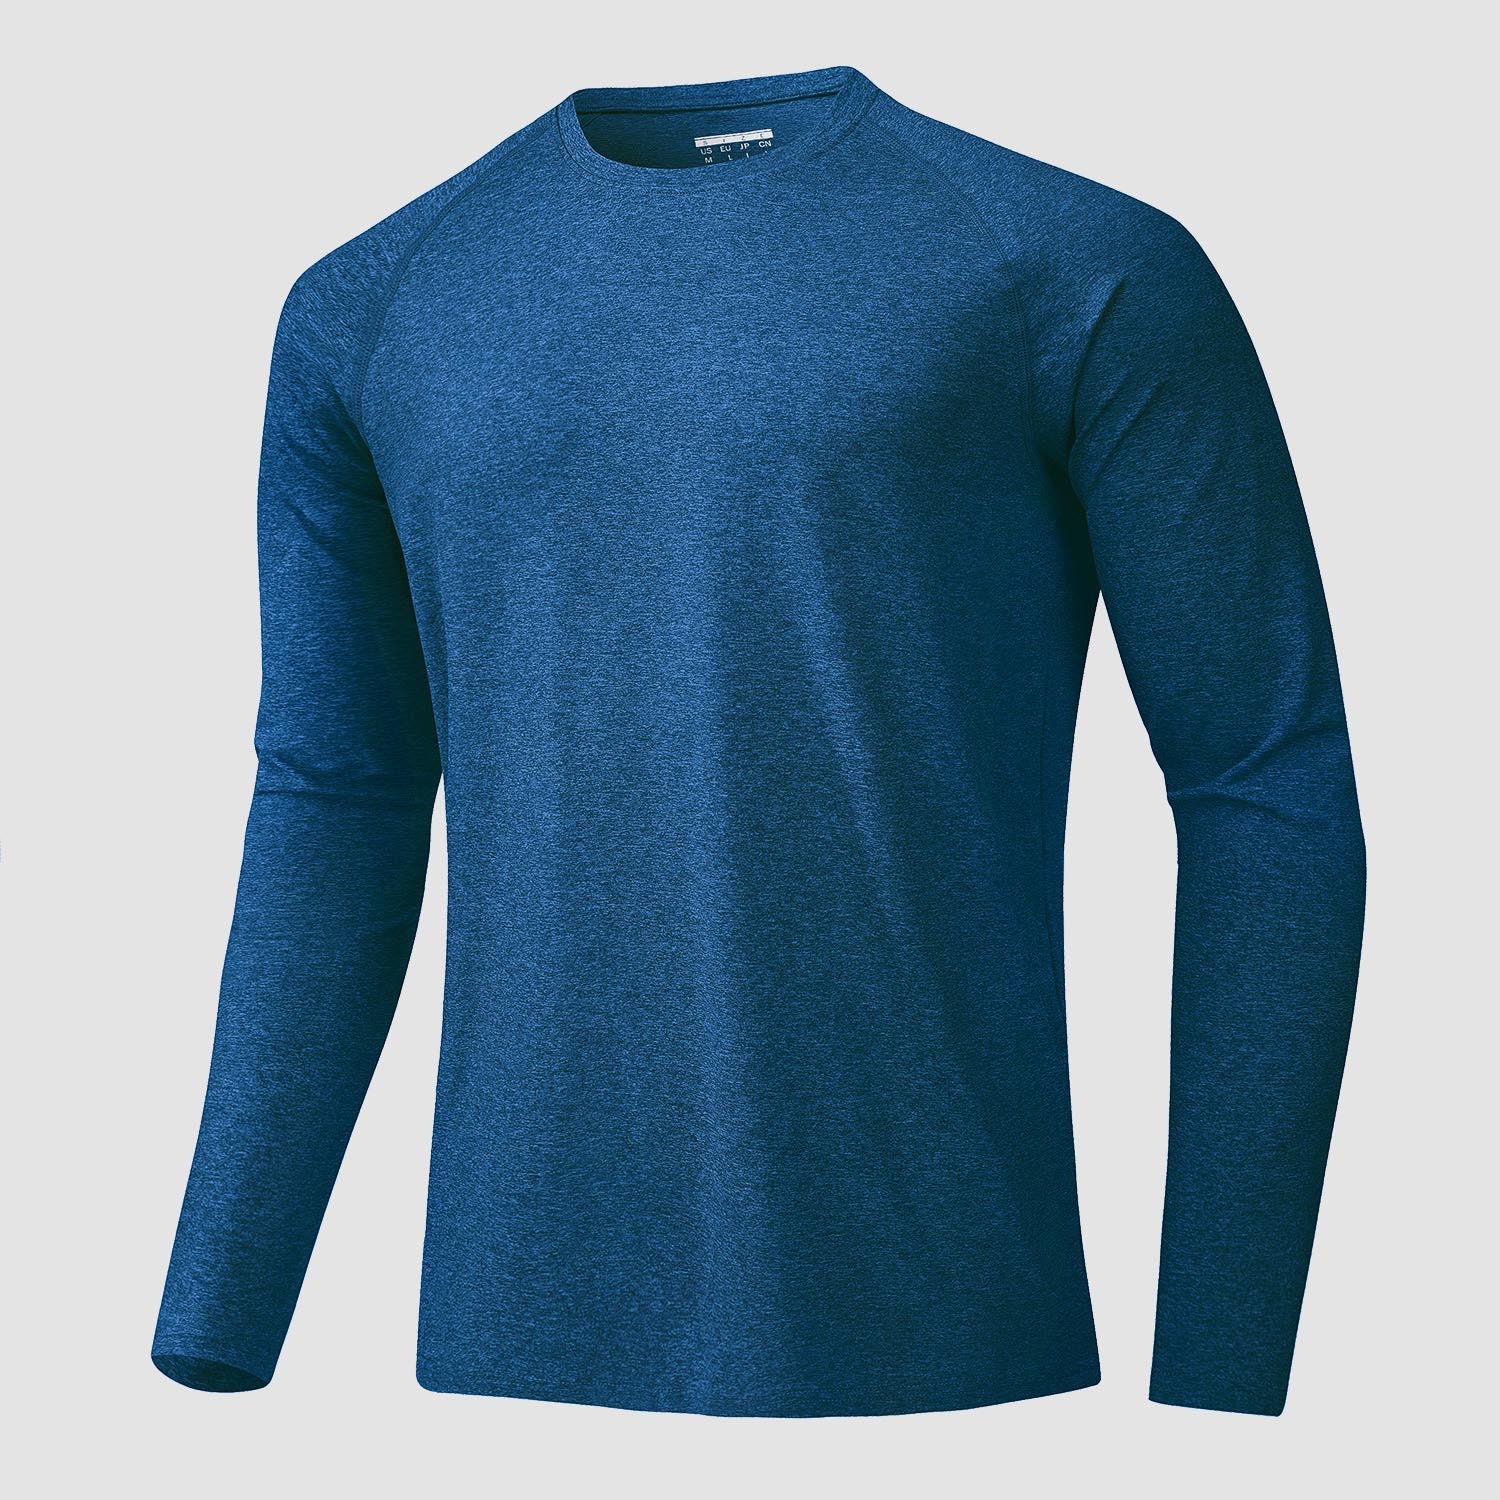 Men's Long Sleeve Shirts UPF 50+ UV Sun Protection Shirt for Hiking Running  Swim Workout Rash Guard Tee